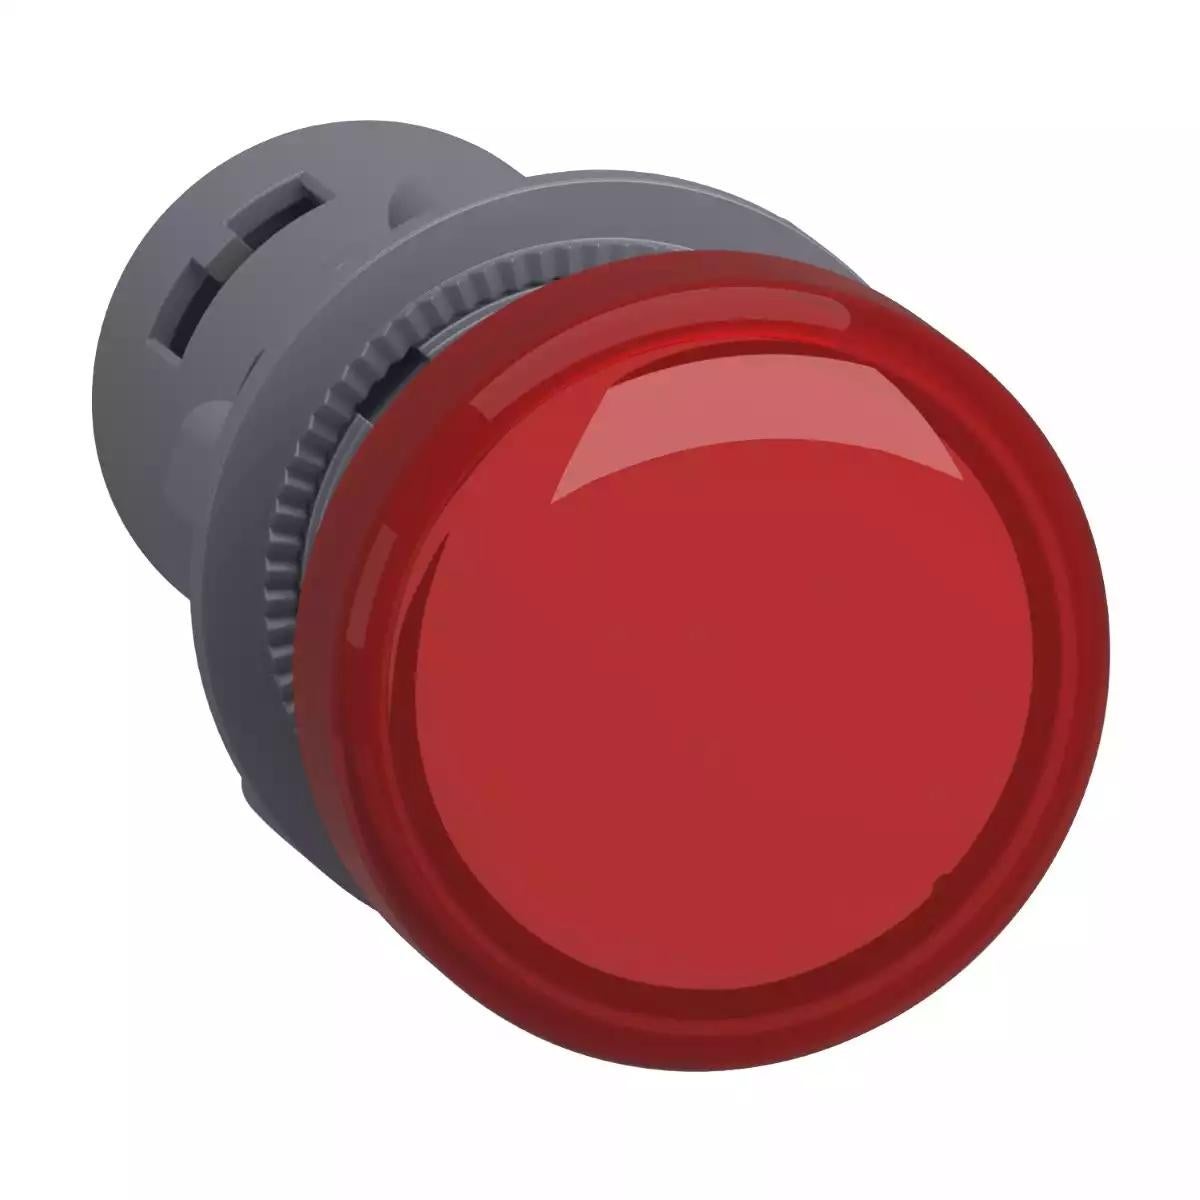 Pilot light, plastic, red, Ø 22 mm, with integral LED, 220…230V AC, Anti-interference